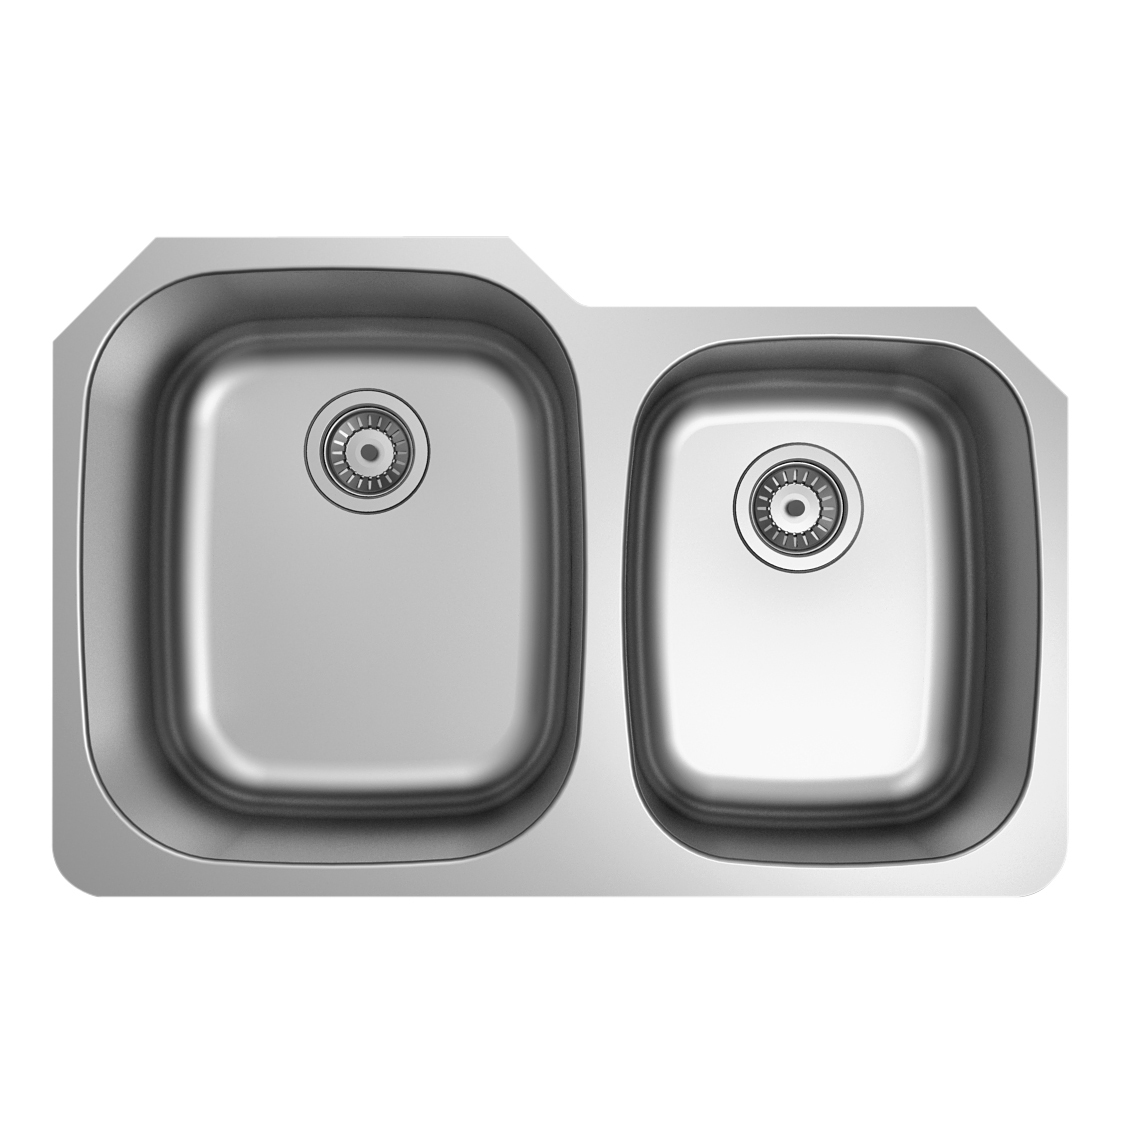 Stainless Steel Double Bowl Undermount Pressed Drawn Kitchen Sink